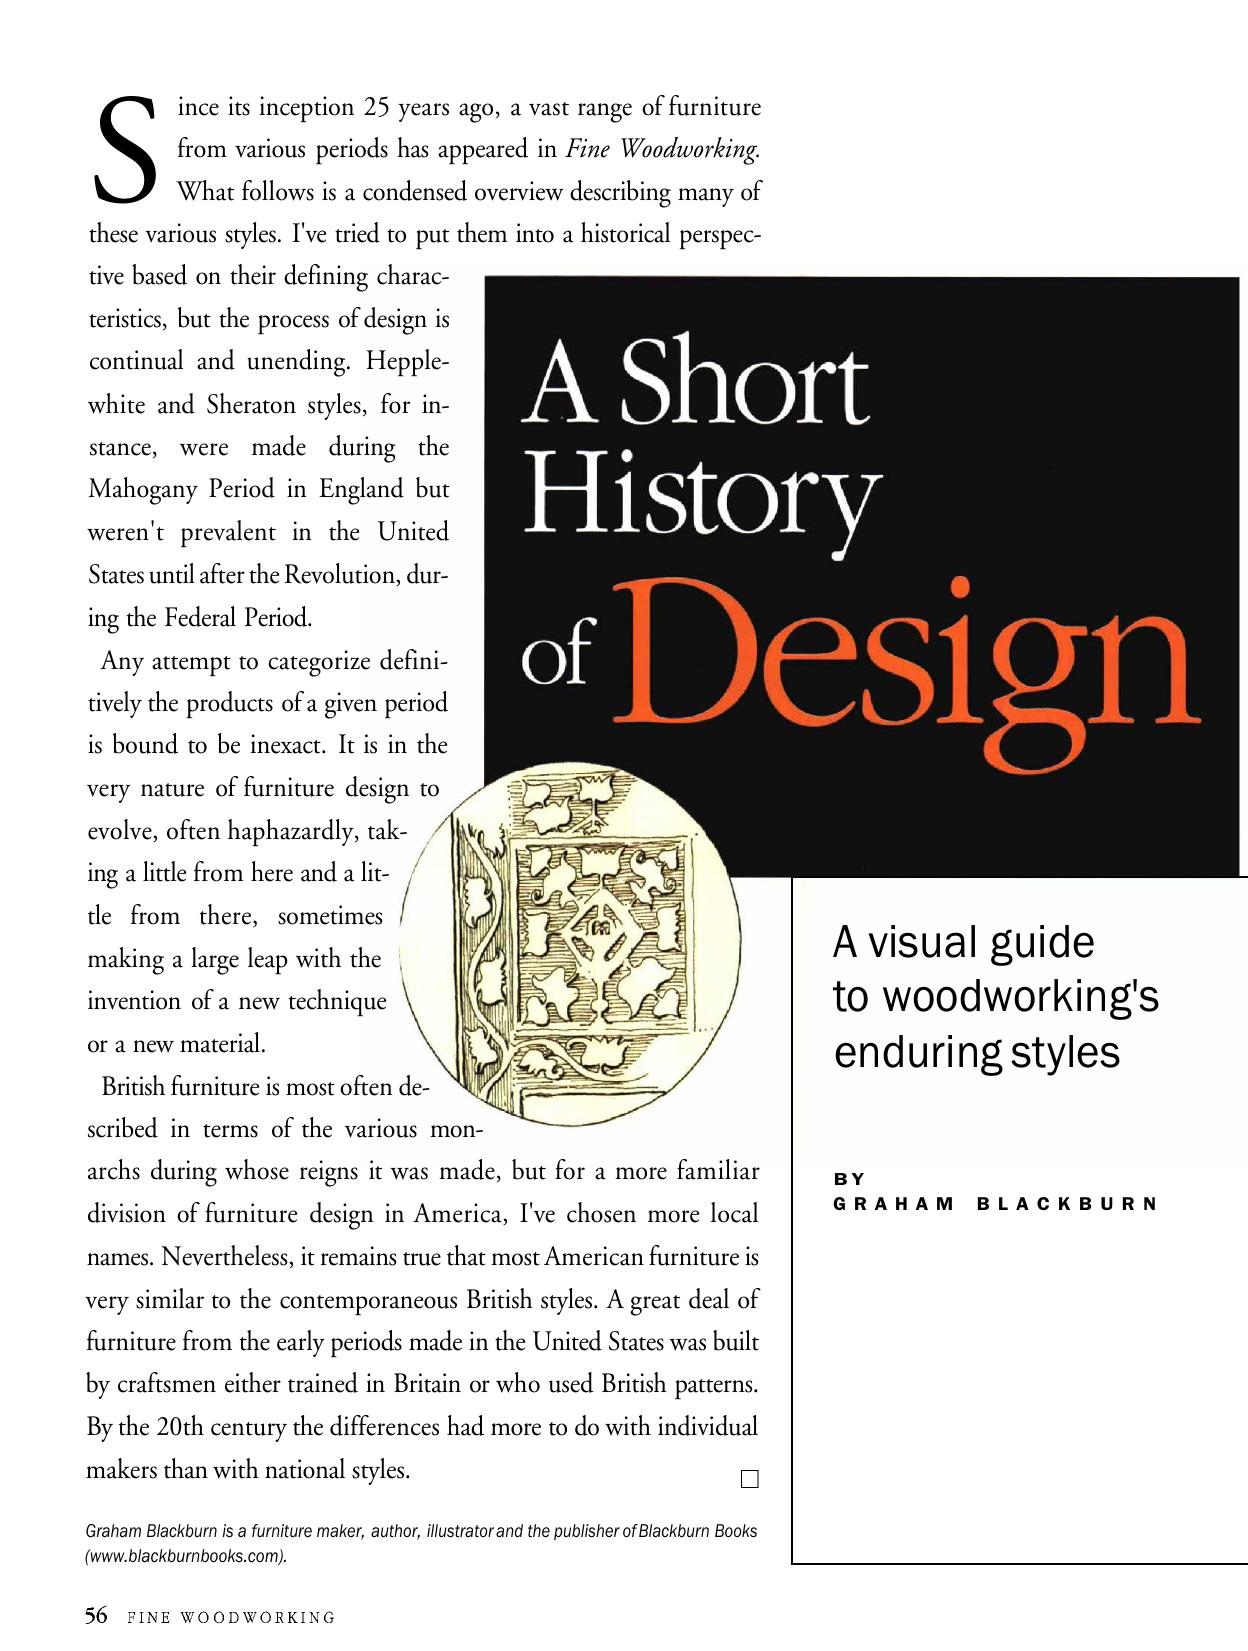 A Short History of Design by Graham Blackburn